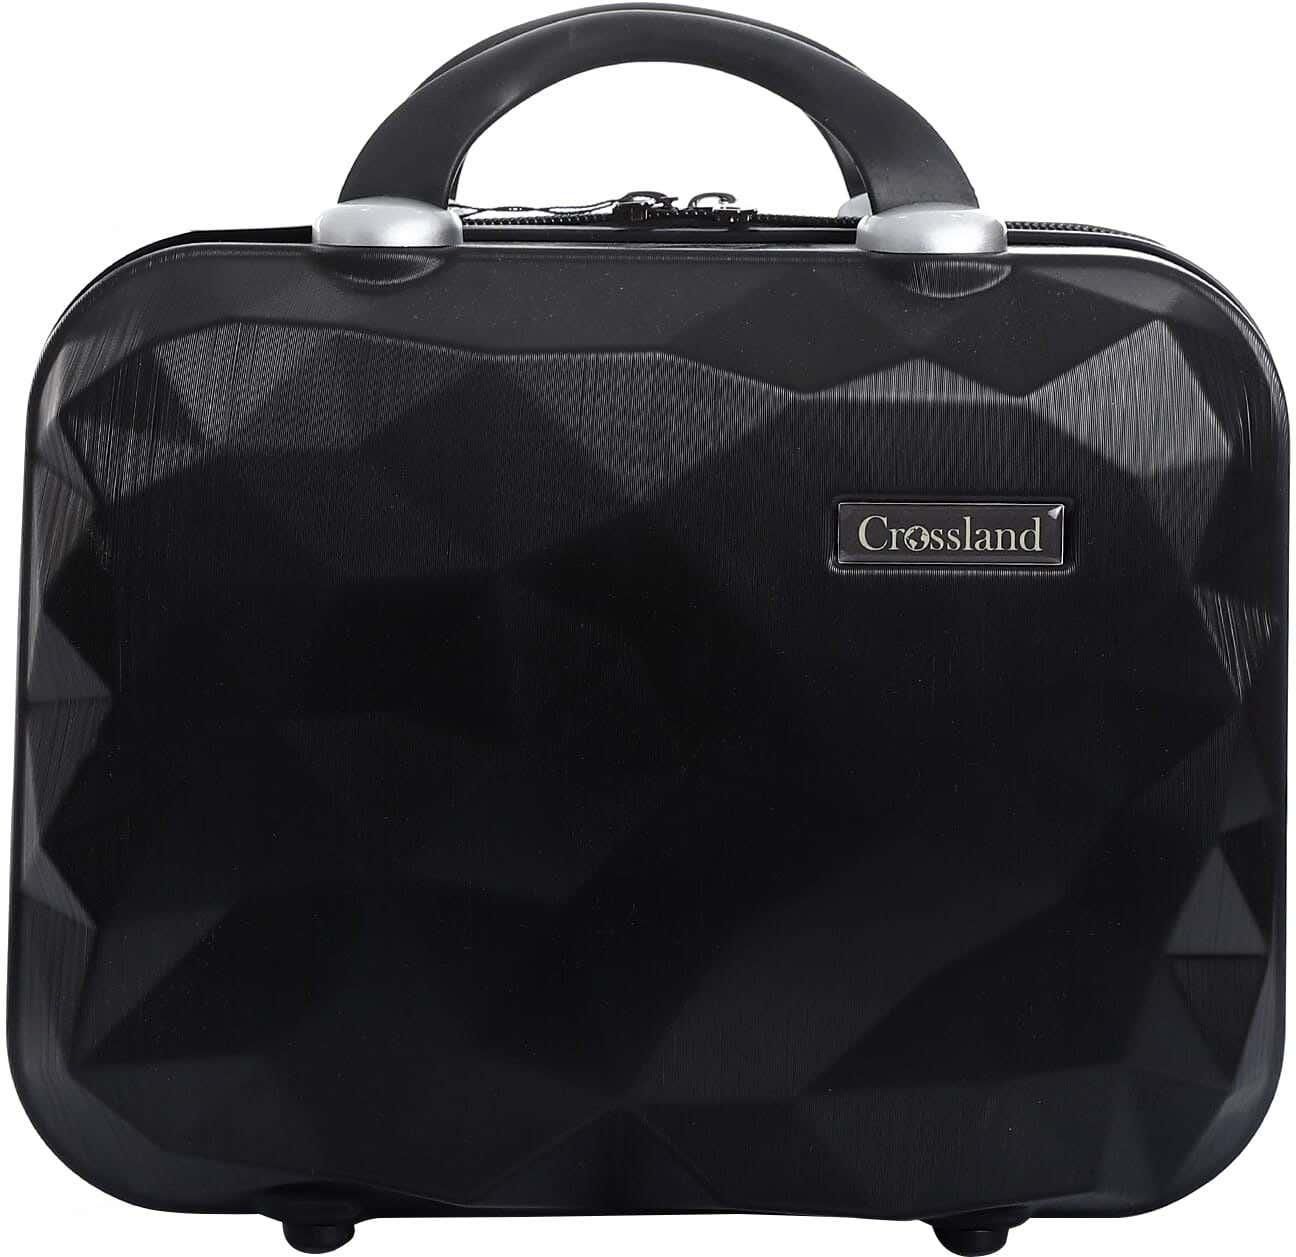 Get Crossland Travel Makeup Bag, 14 Inch - Black with best offers | Raneen.com